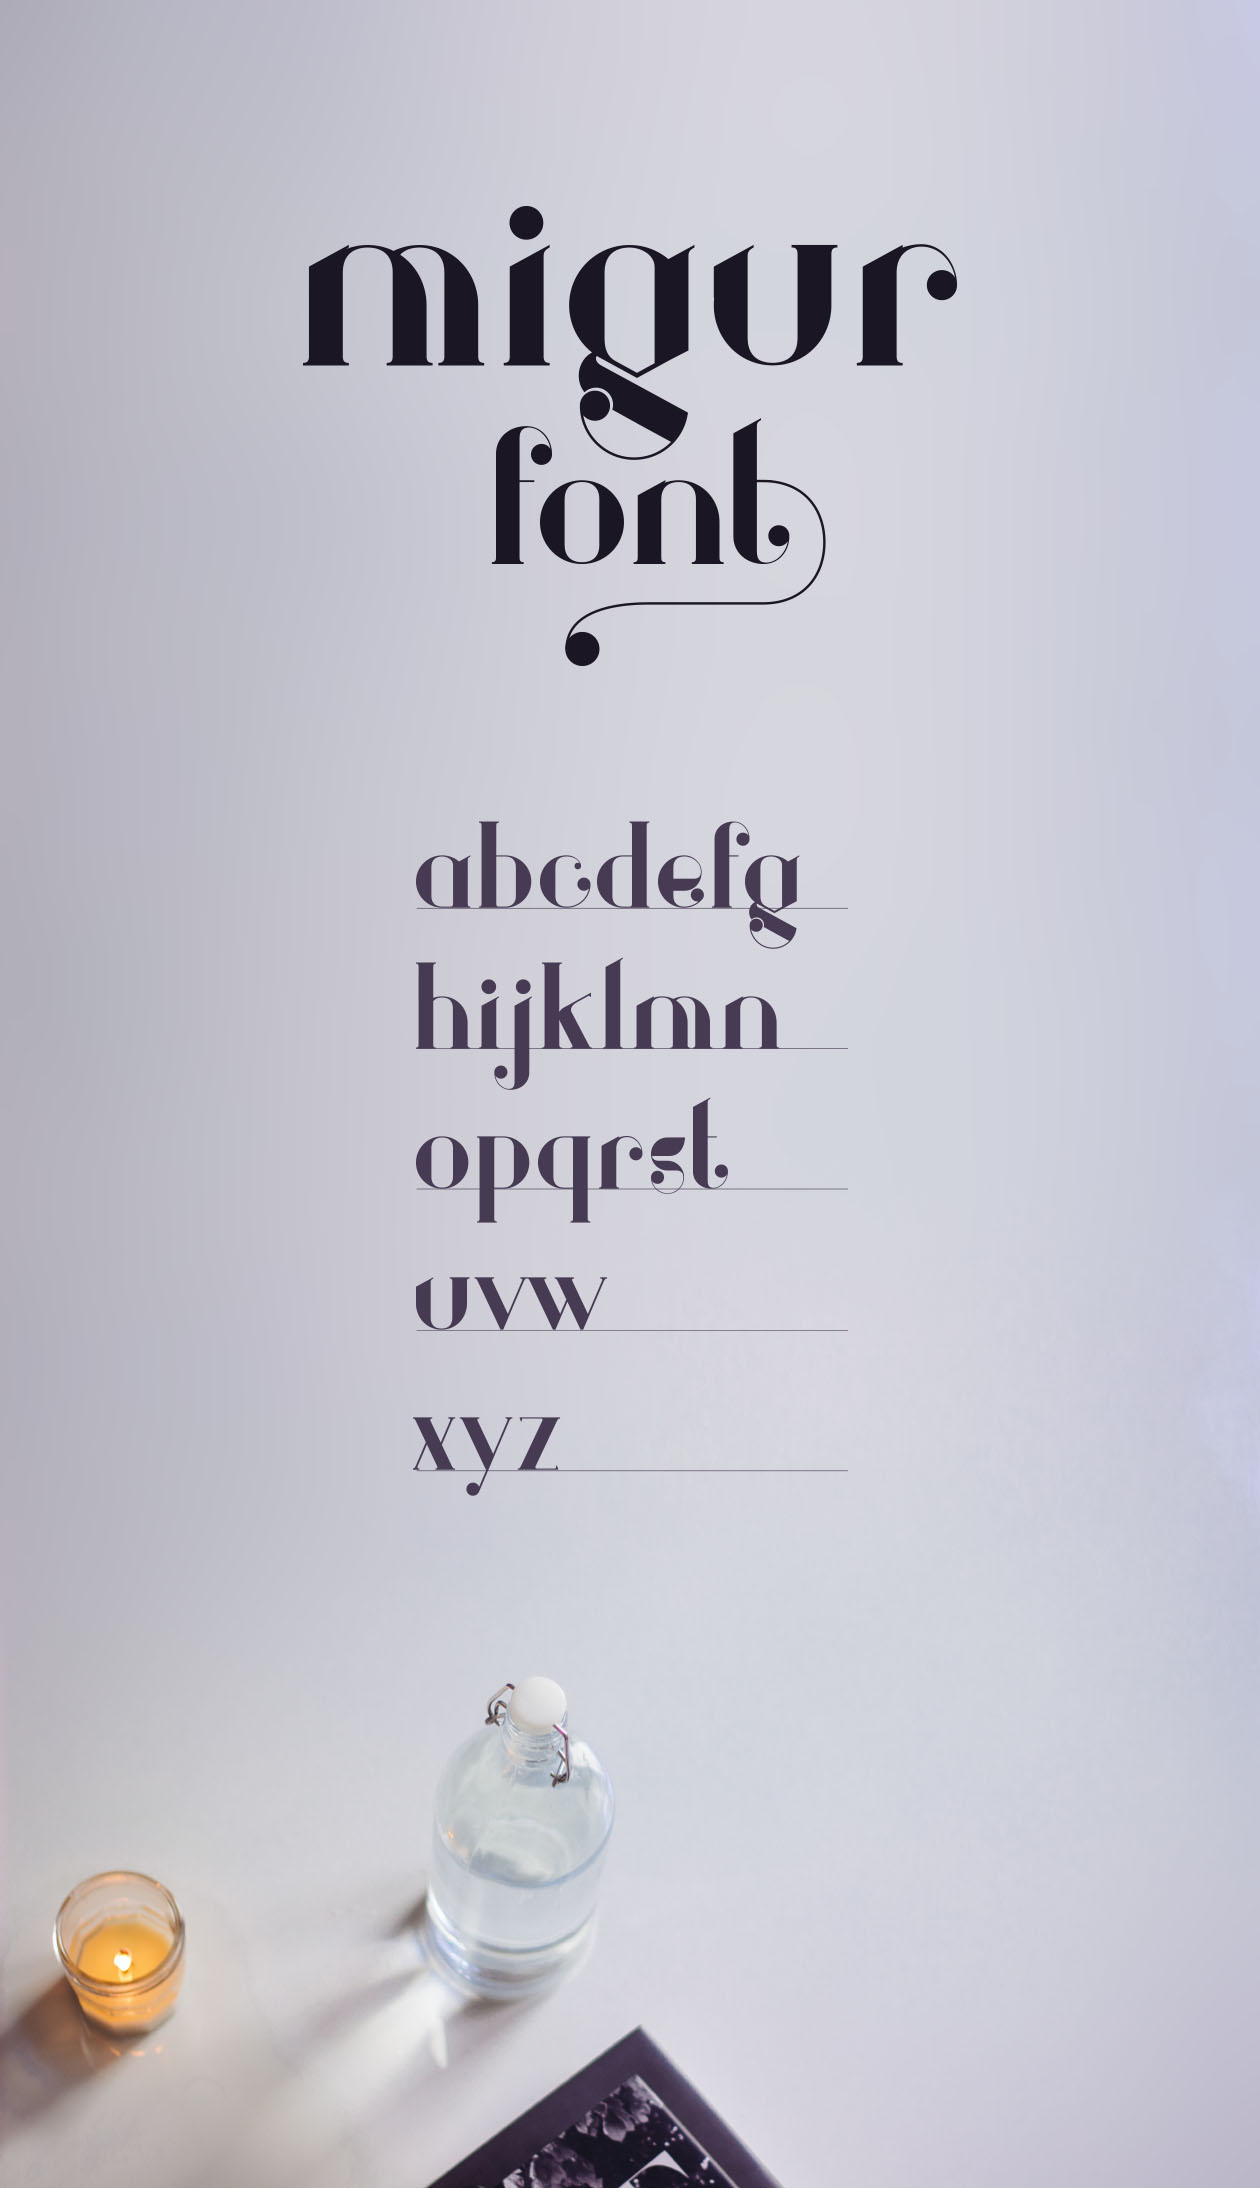 Behance网站推荐最佳英文排版印刷字体第一素材精选之一 Migur Serif Font插图(1)